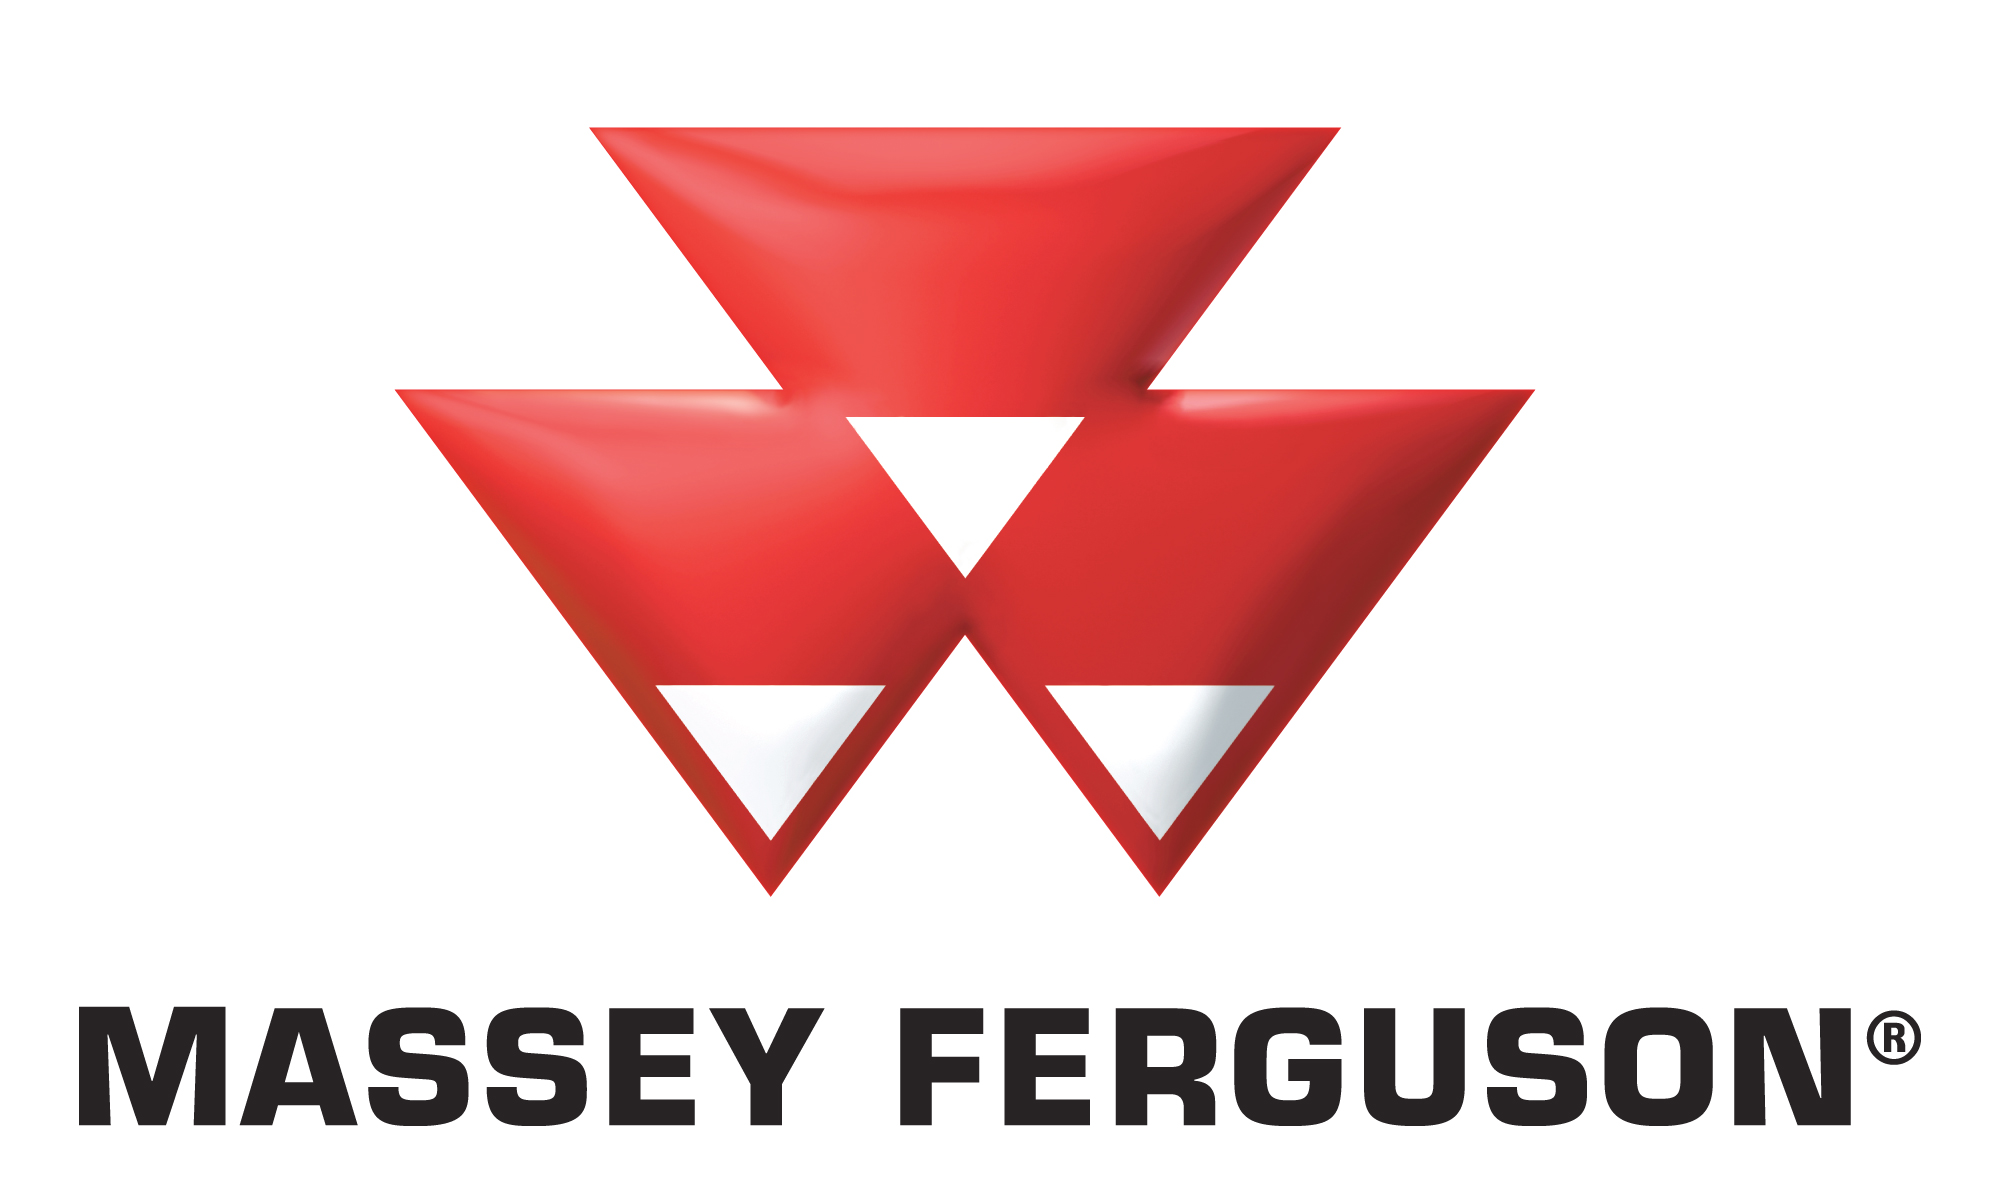 Massey Ferguson Symbol Wallpaper